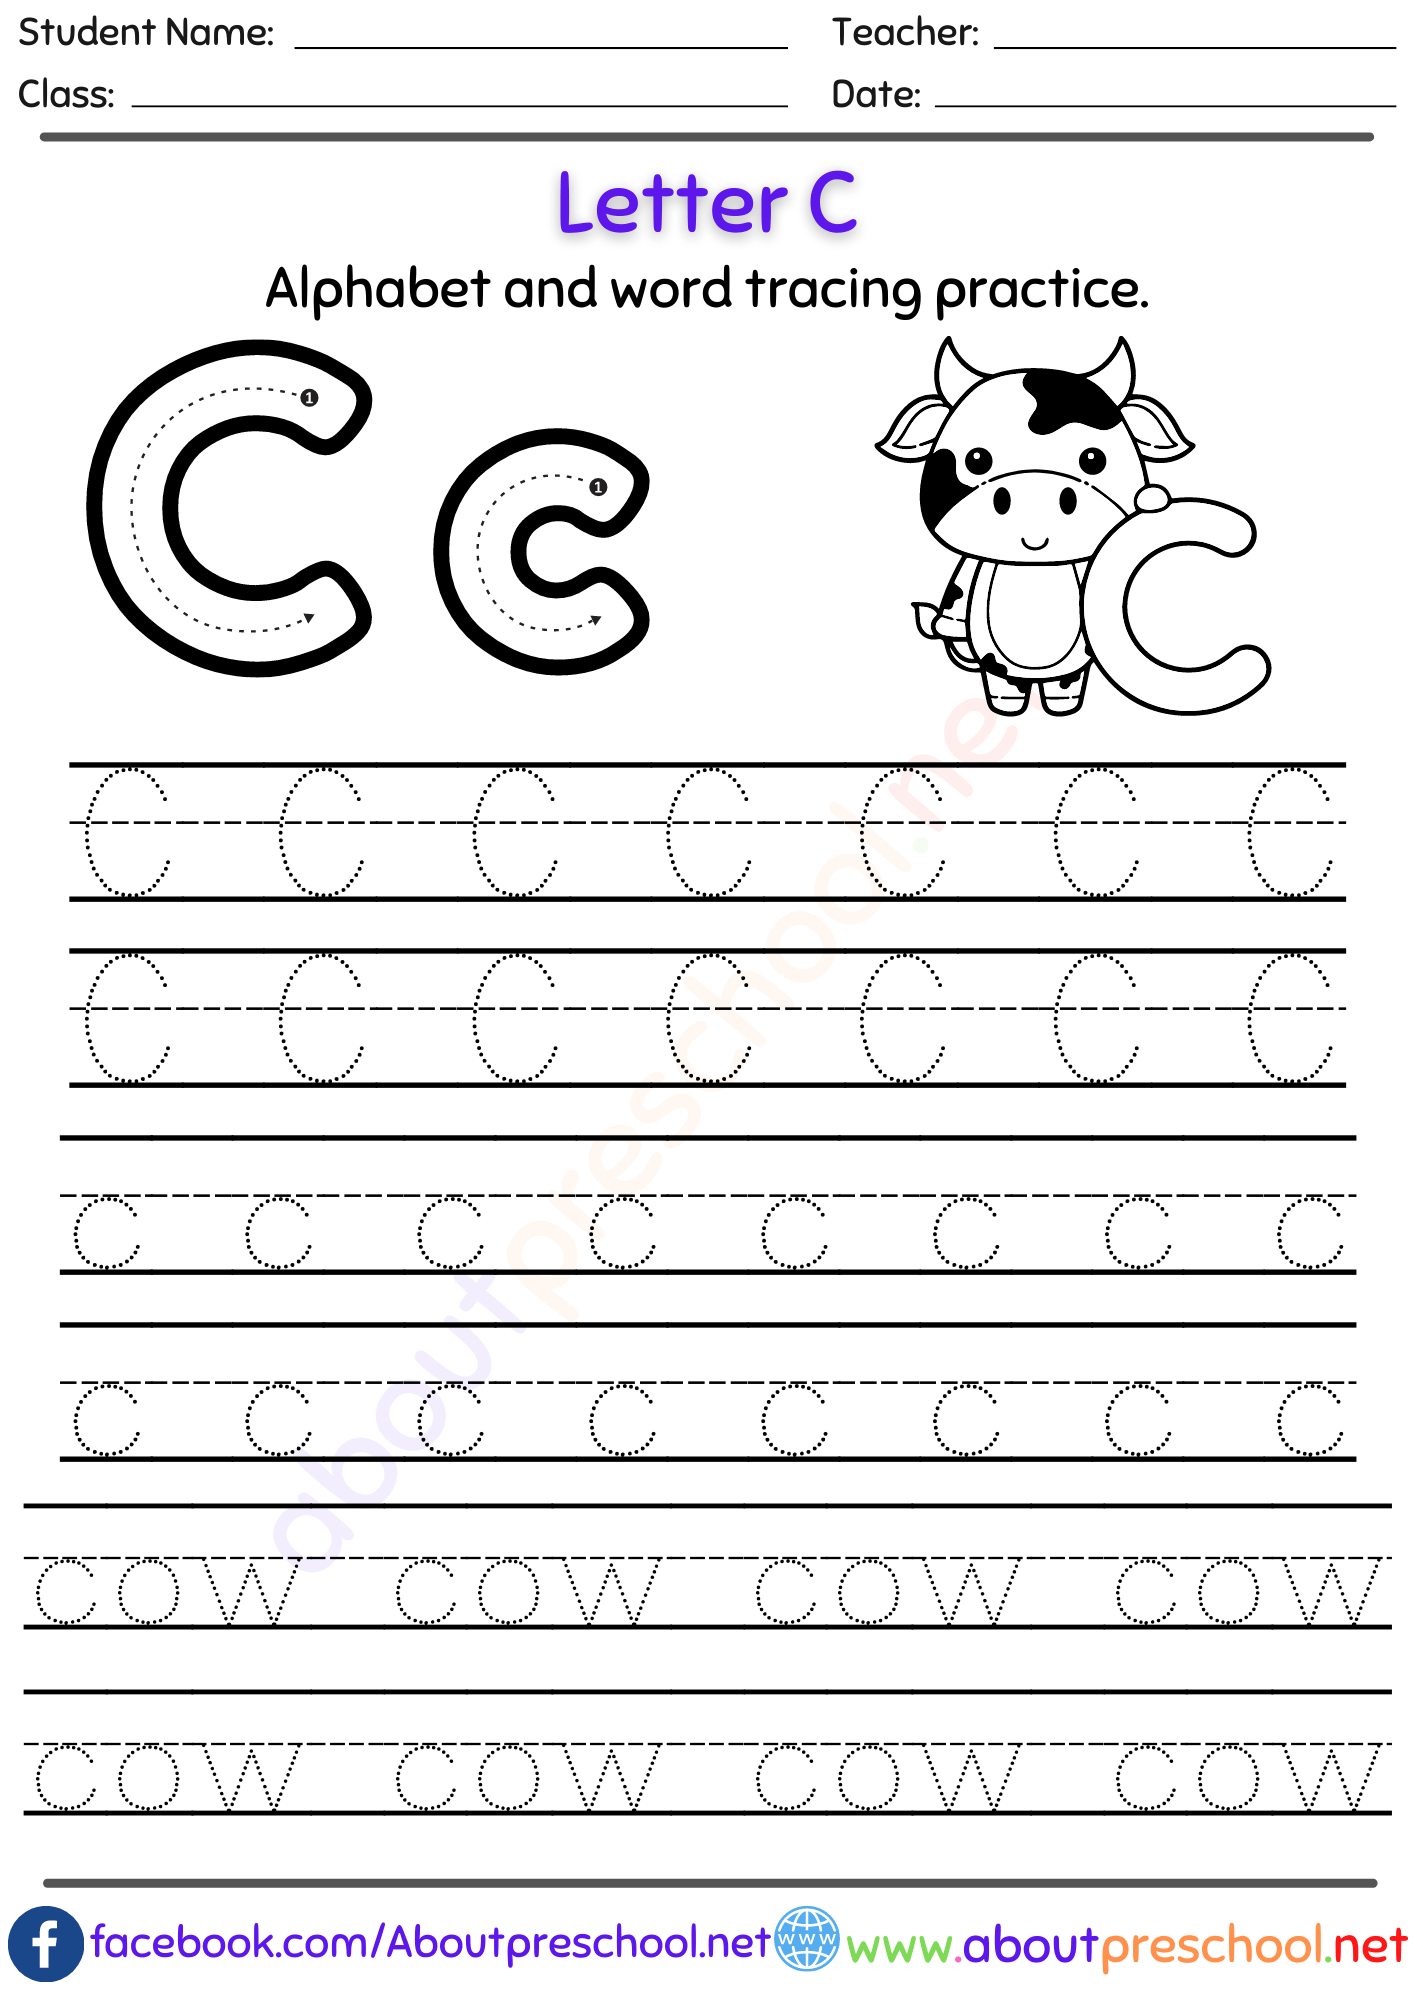 Free Letter C Alphabet tracing worksheets